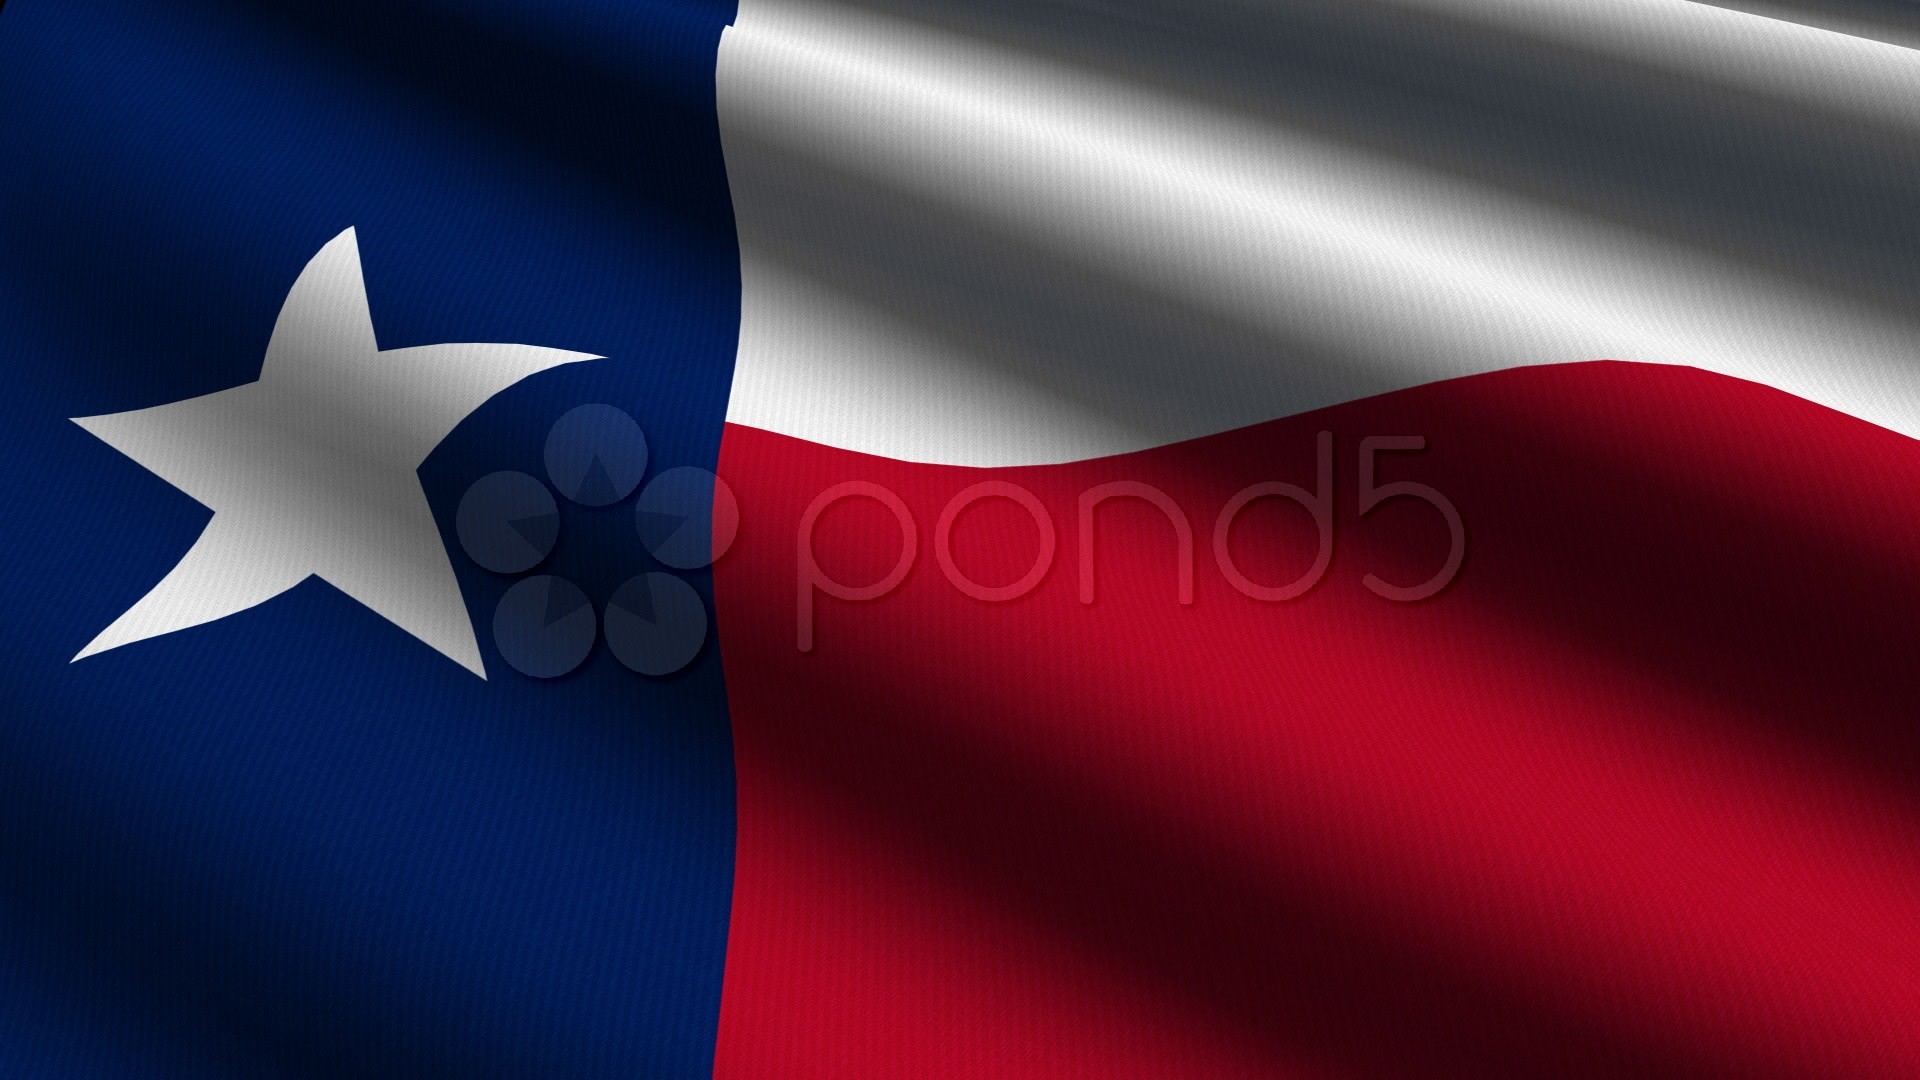 1920x1080 Texas Flag Desktop Wallpaper Wallpapersafari. Similiar Texas Flag  Screensaver Keywords